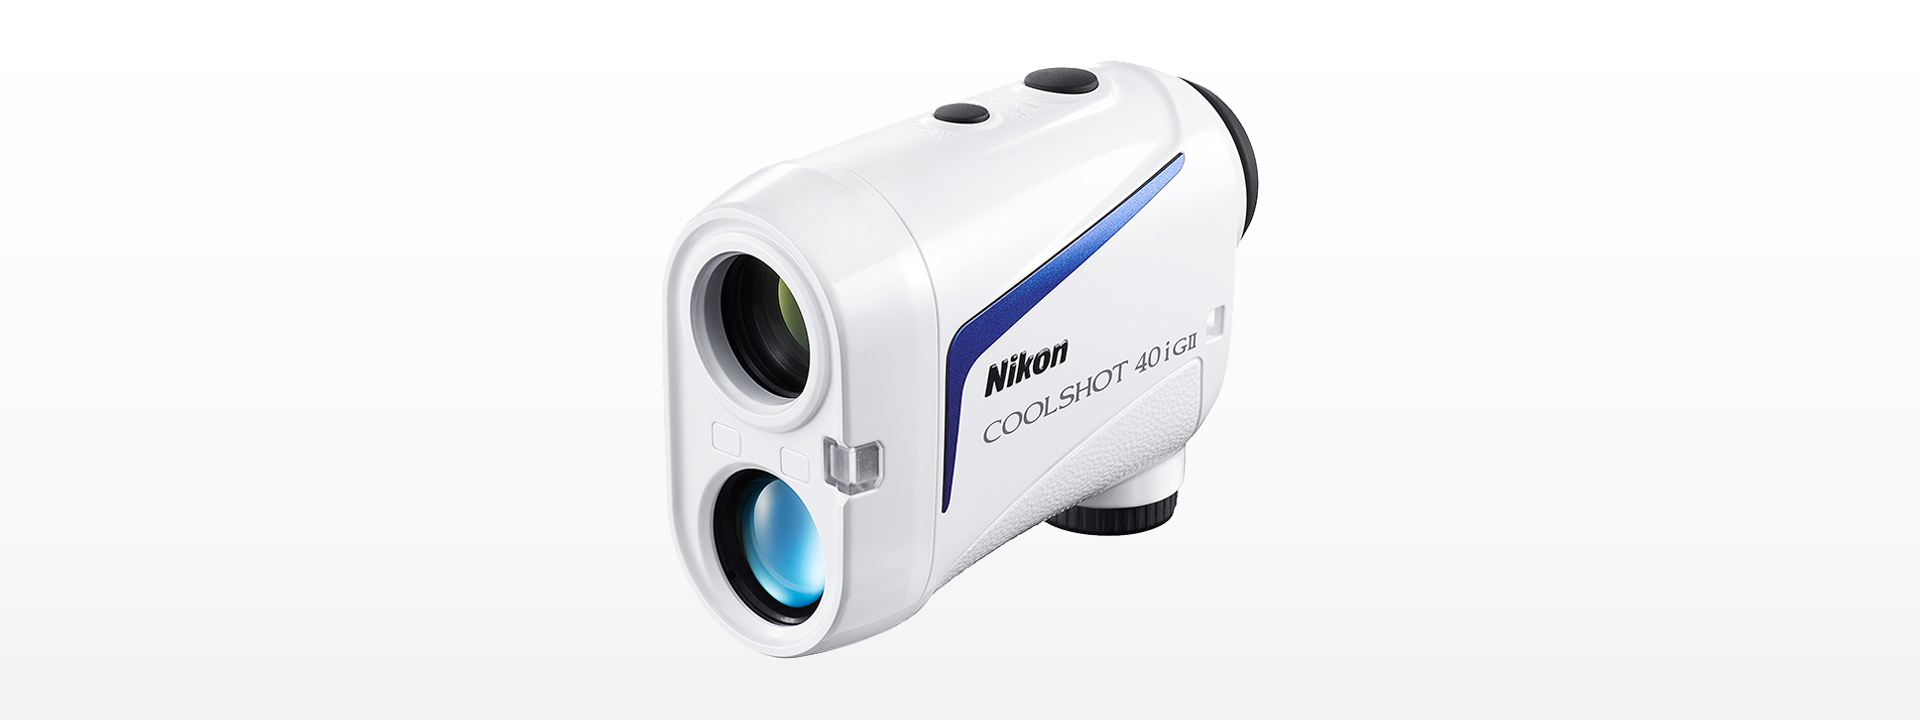 Nikon ゴルフ用レーザー距離計 COOLSHOT 40i GIIコースで数回使用